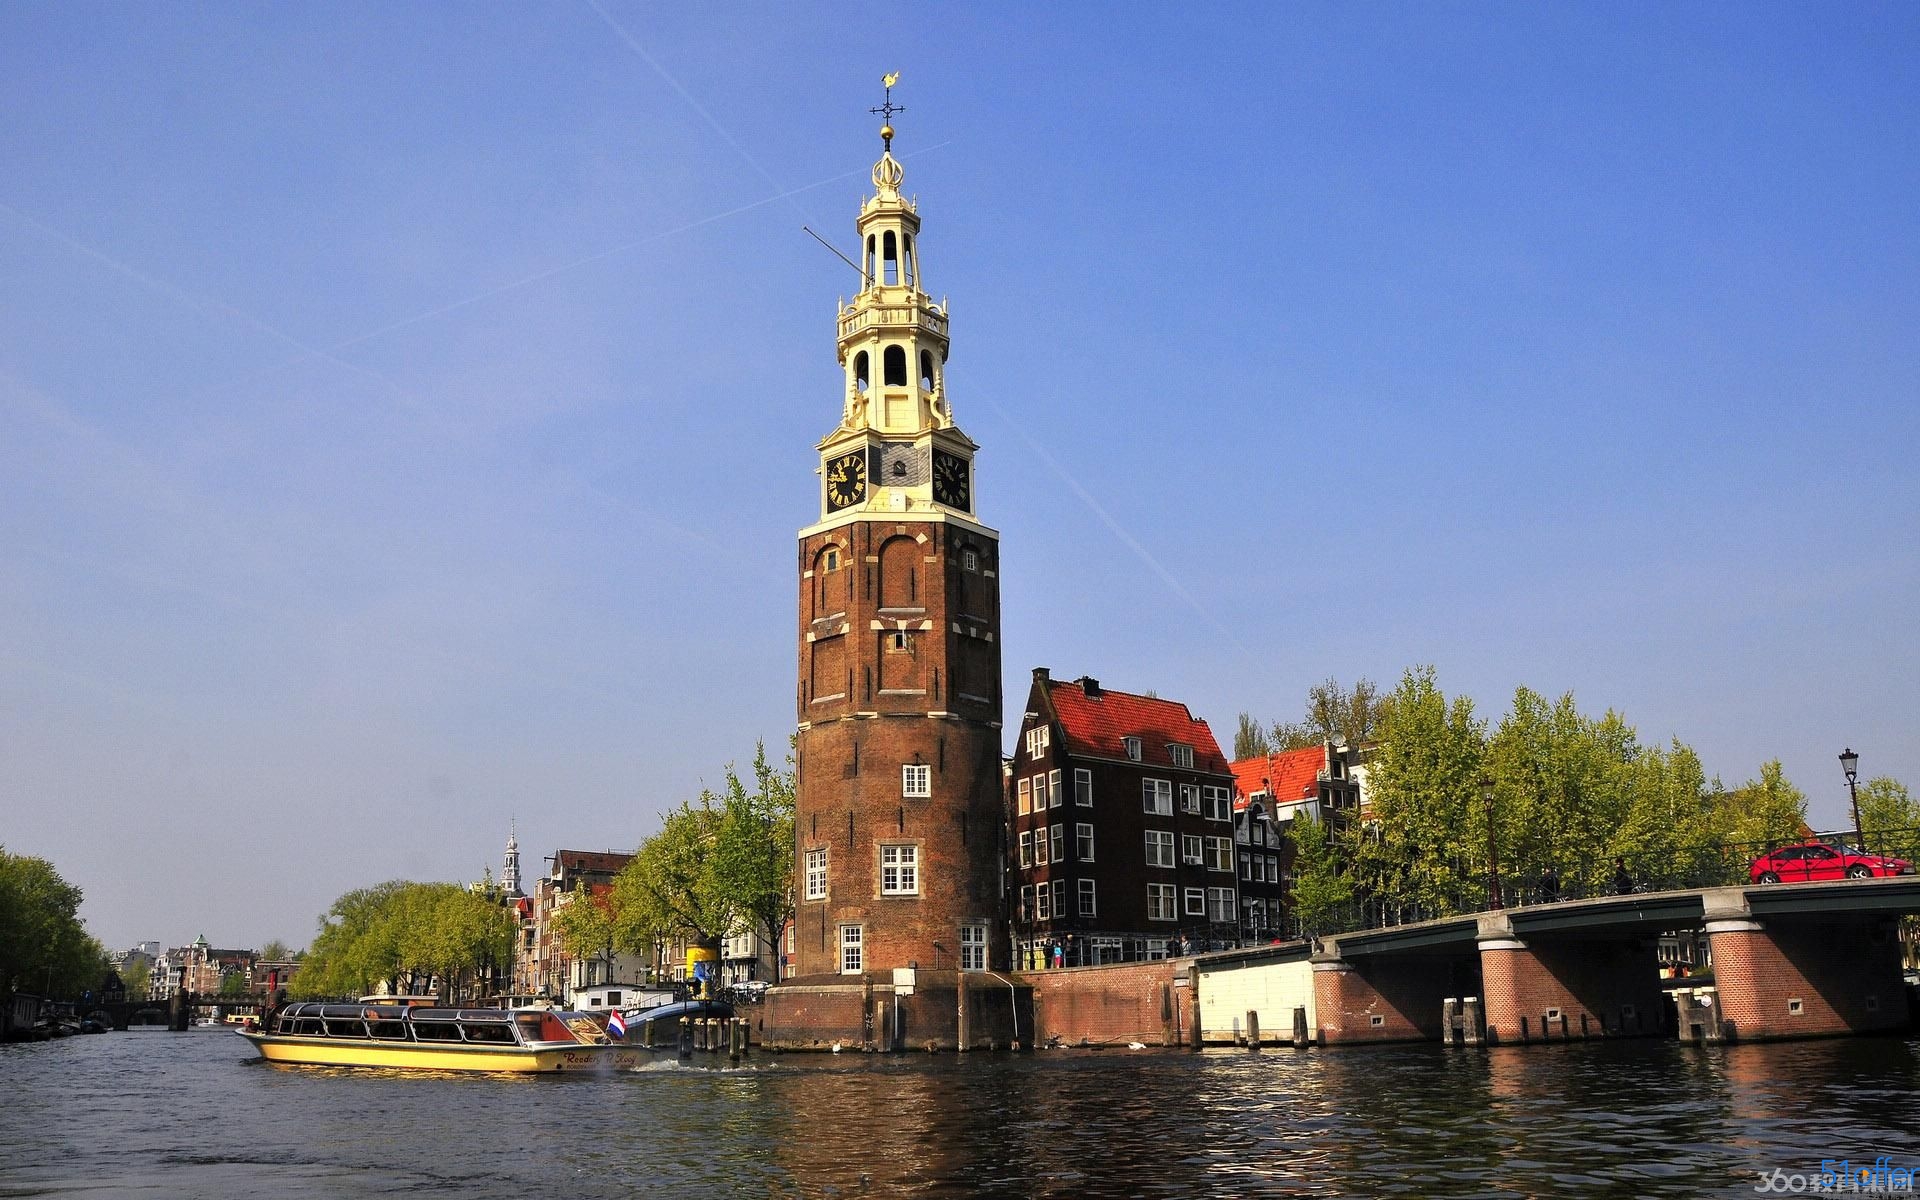 Zoekjaar助留学生在荷兰就业 - 51offer免费留学服务智能平台